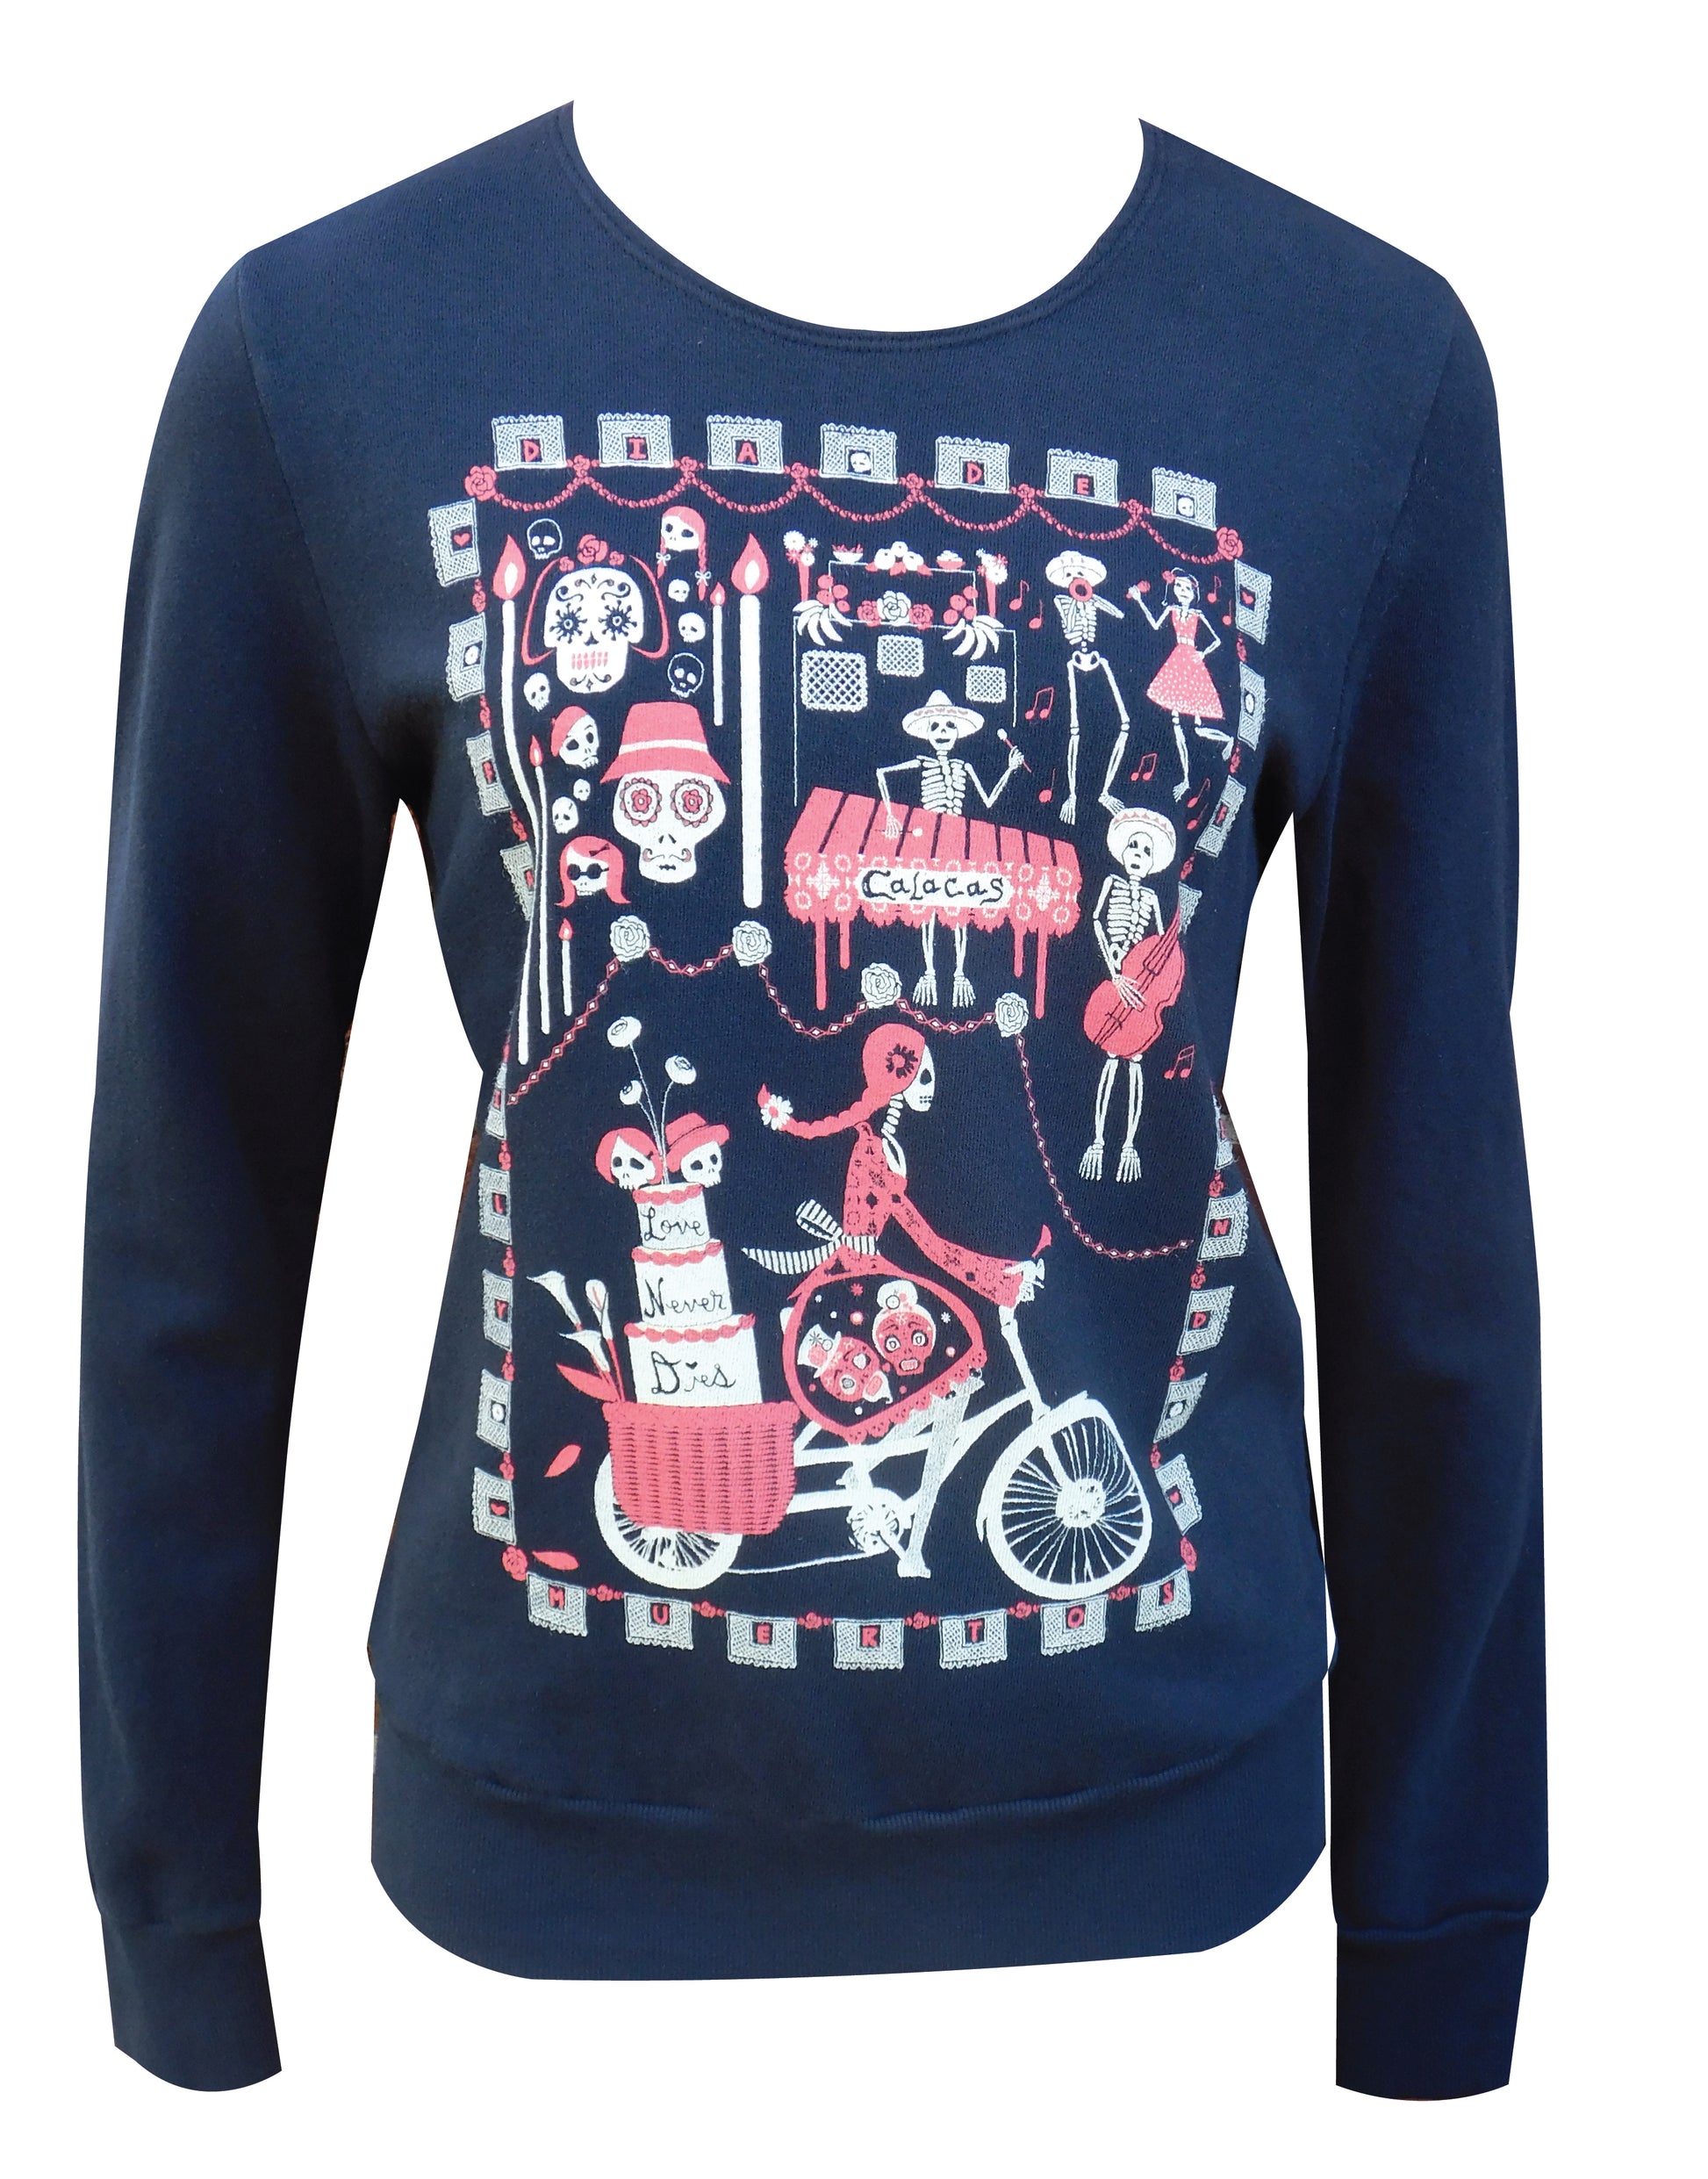 Navy sweatshirt featuring skeletons celebrating and riding bikes